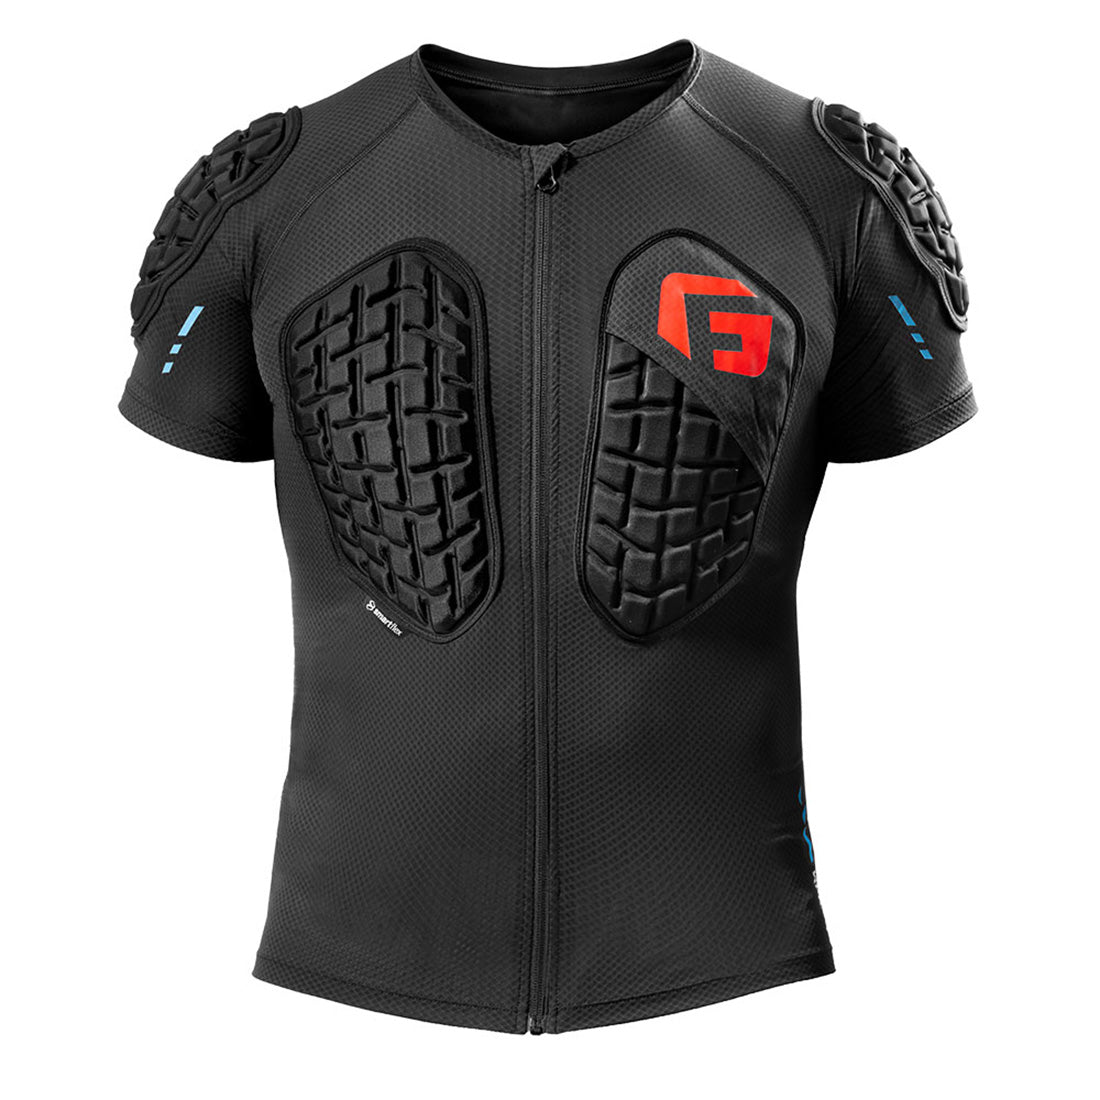 G-Form MX360 Impact Shirt Protective Gear